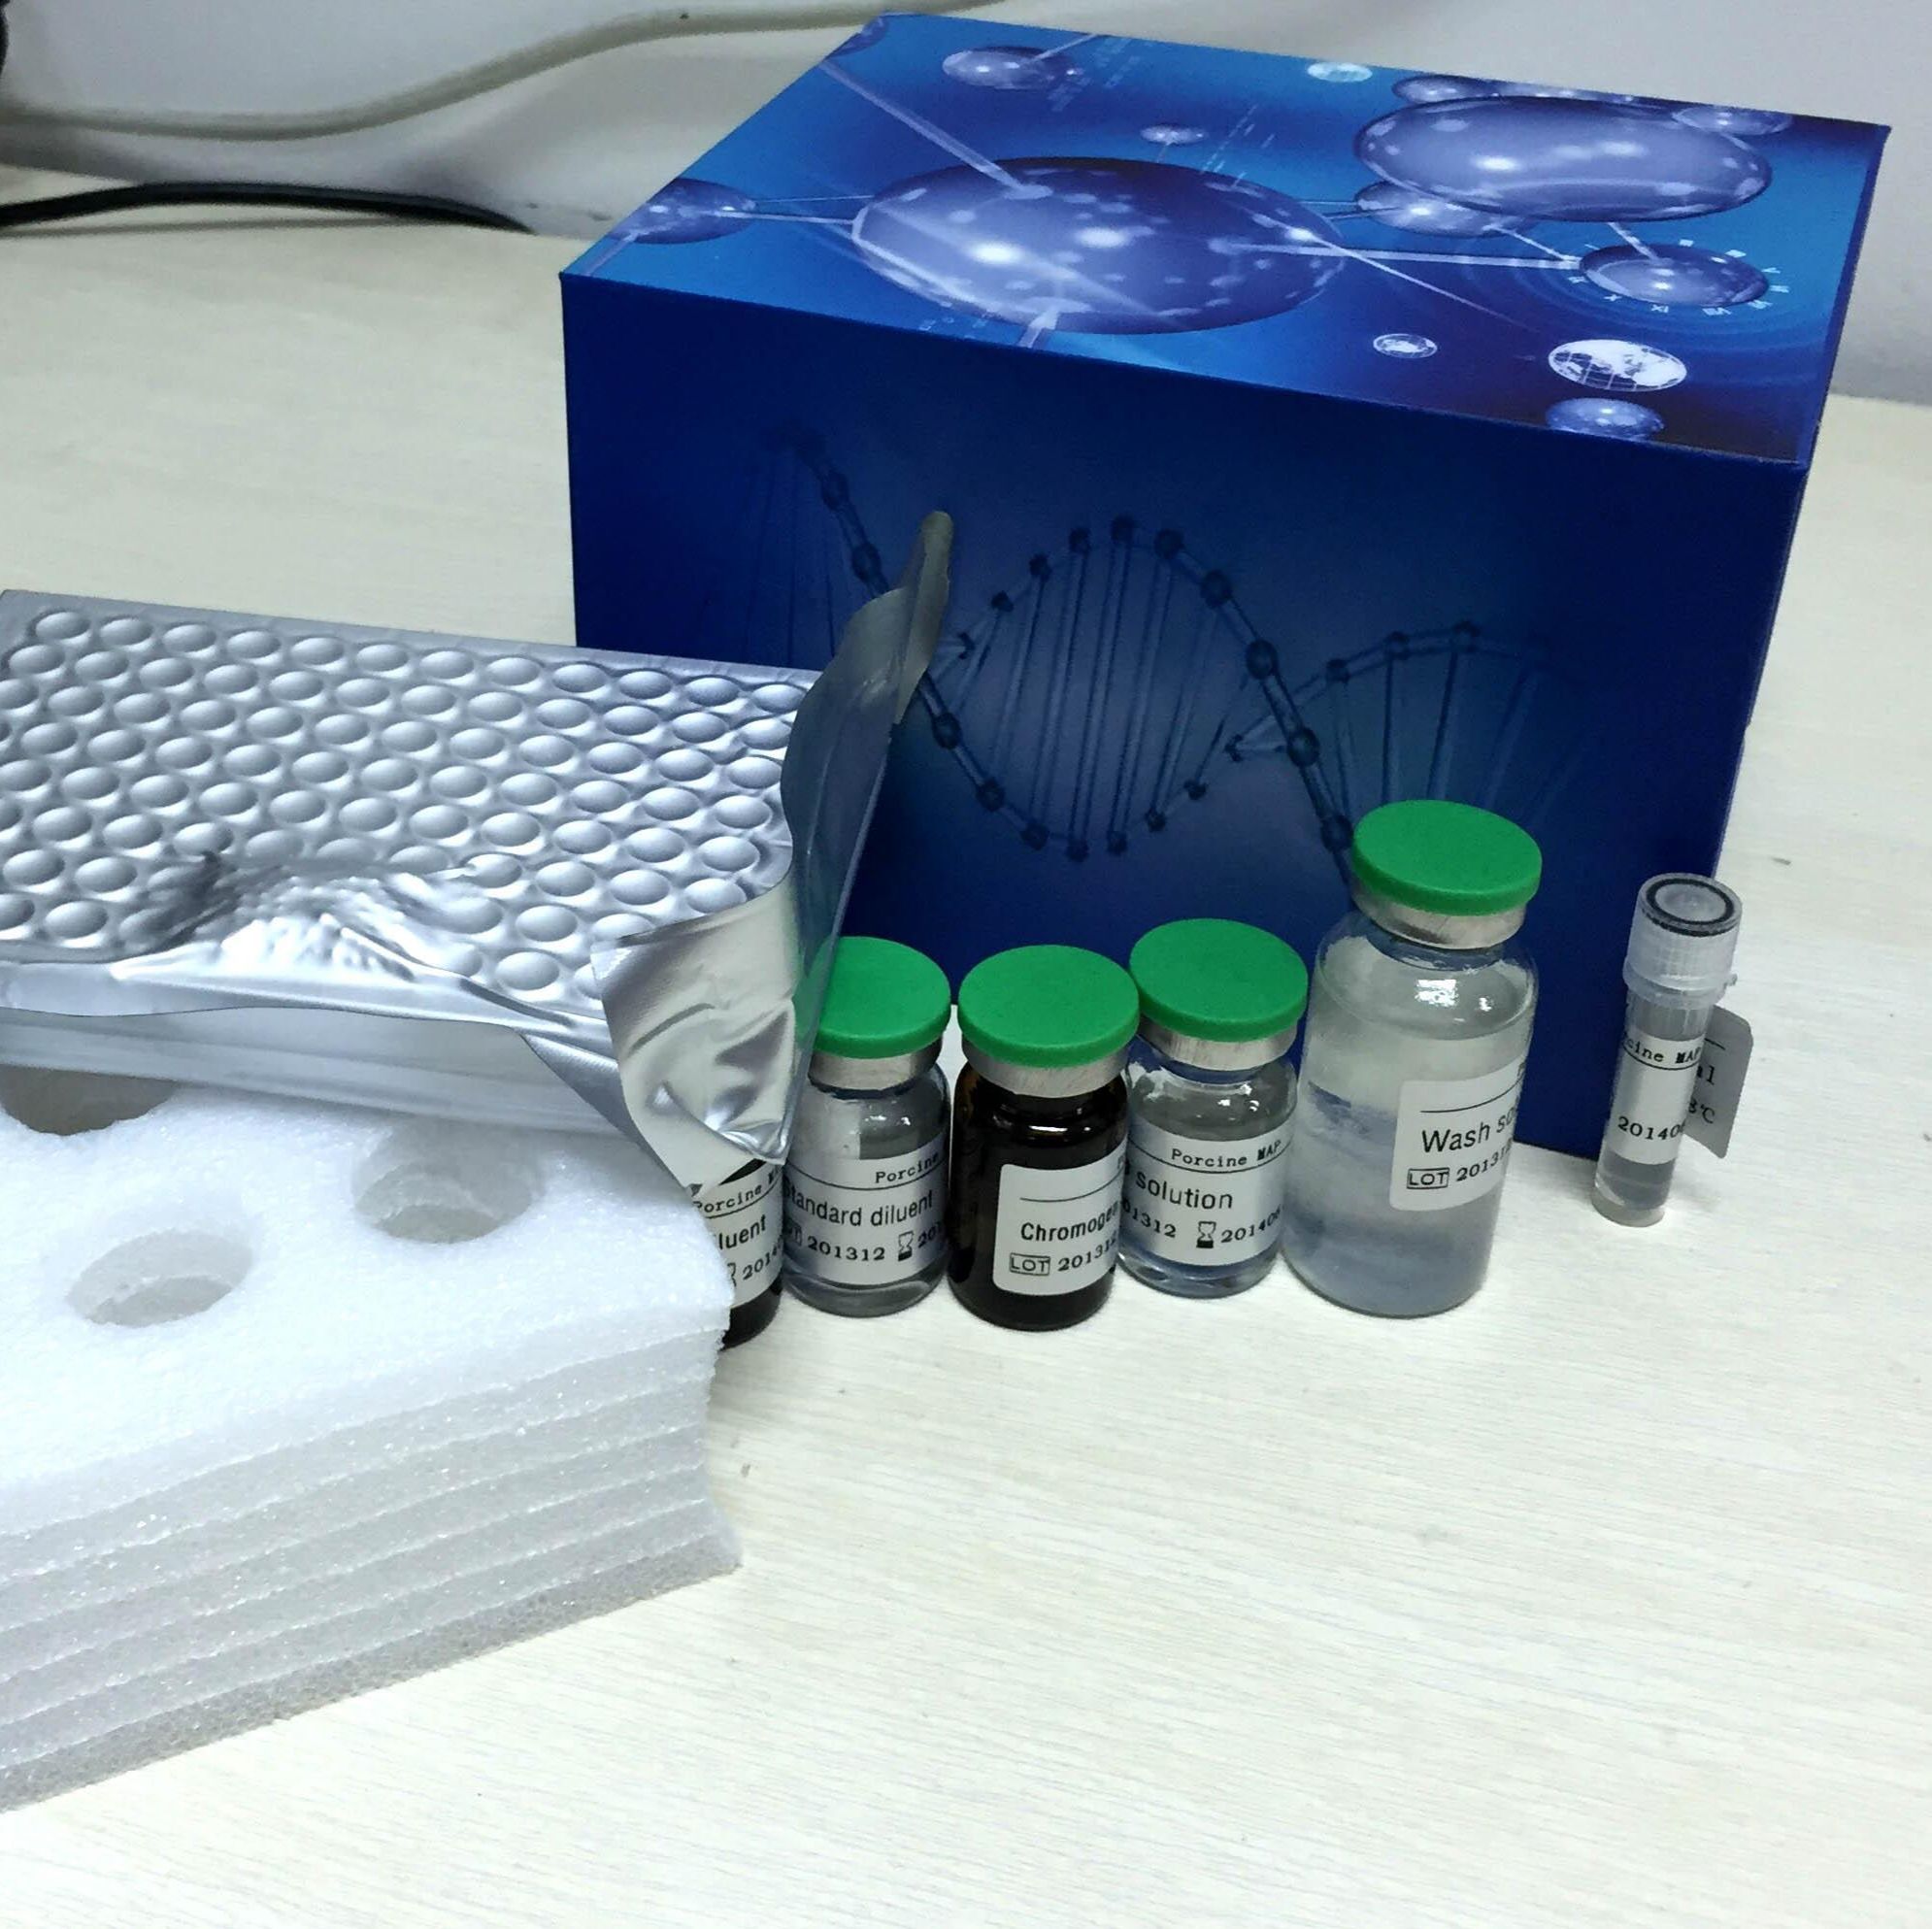 人低分子肝素(LMWH)ELISA试剂盒